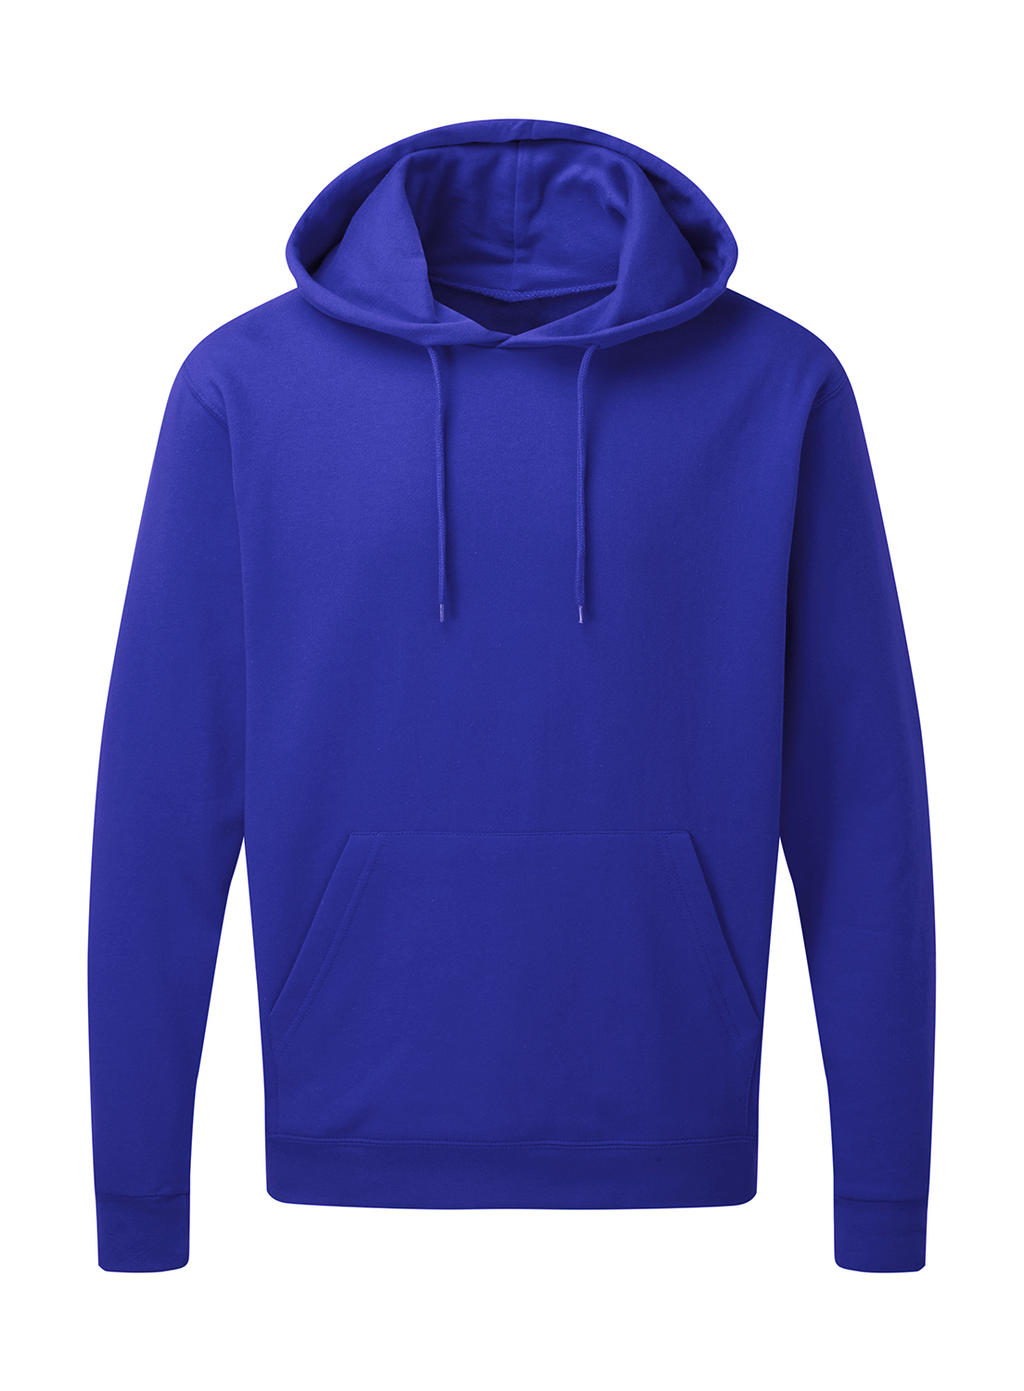  Mens Hooded Sweatshirt in Farbe Royal Blue